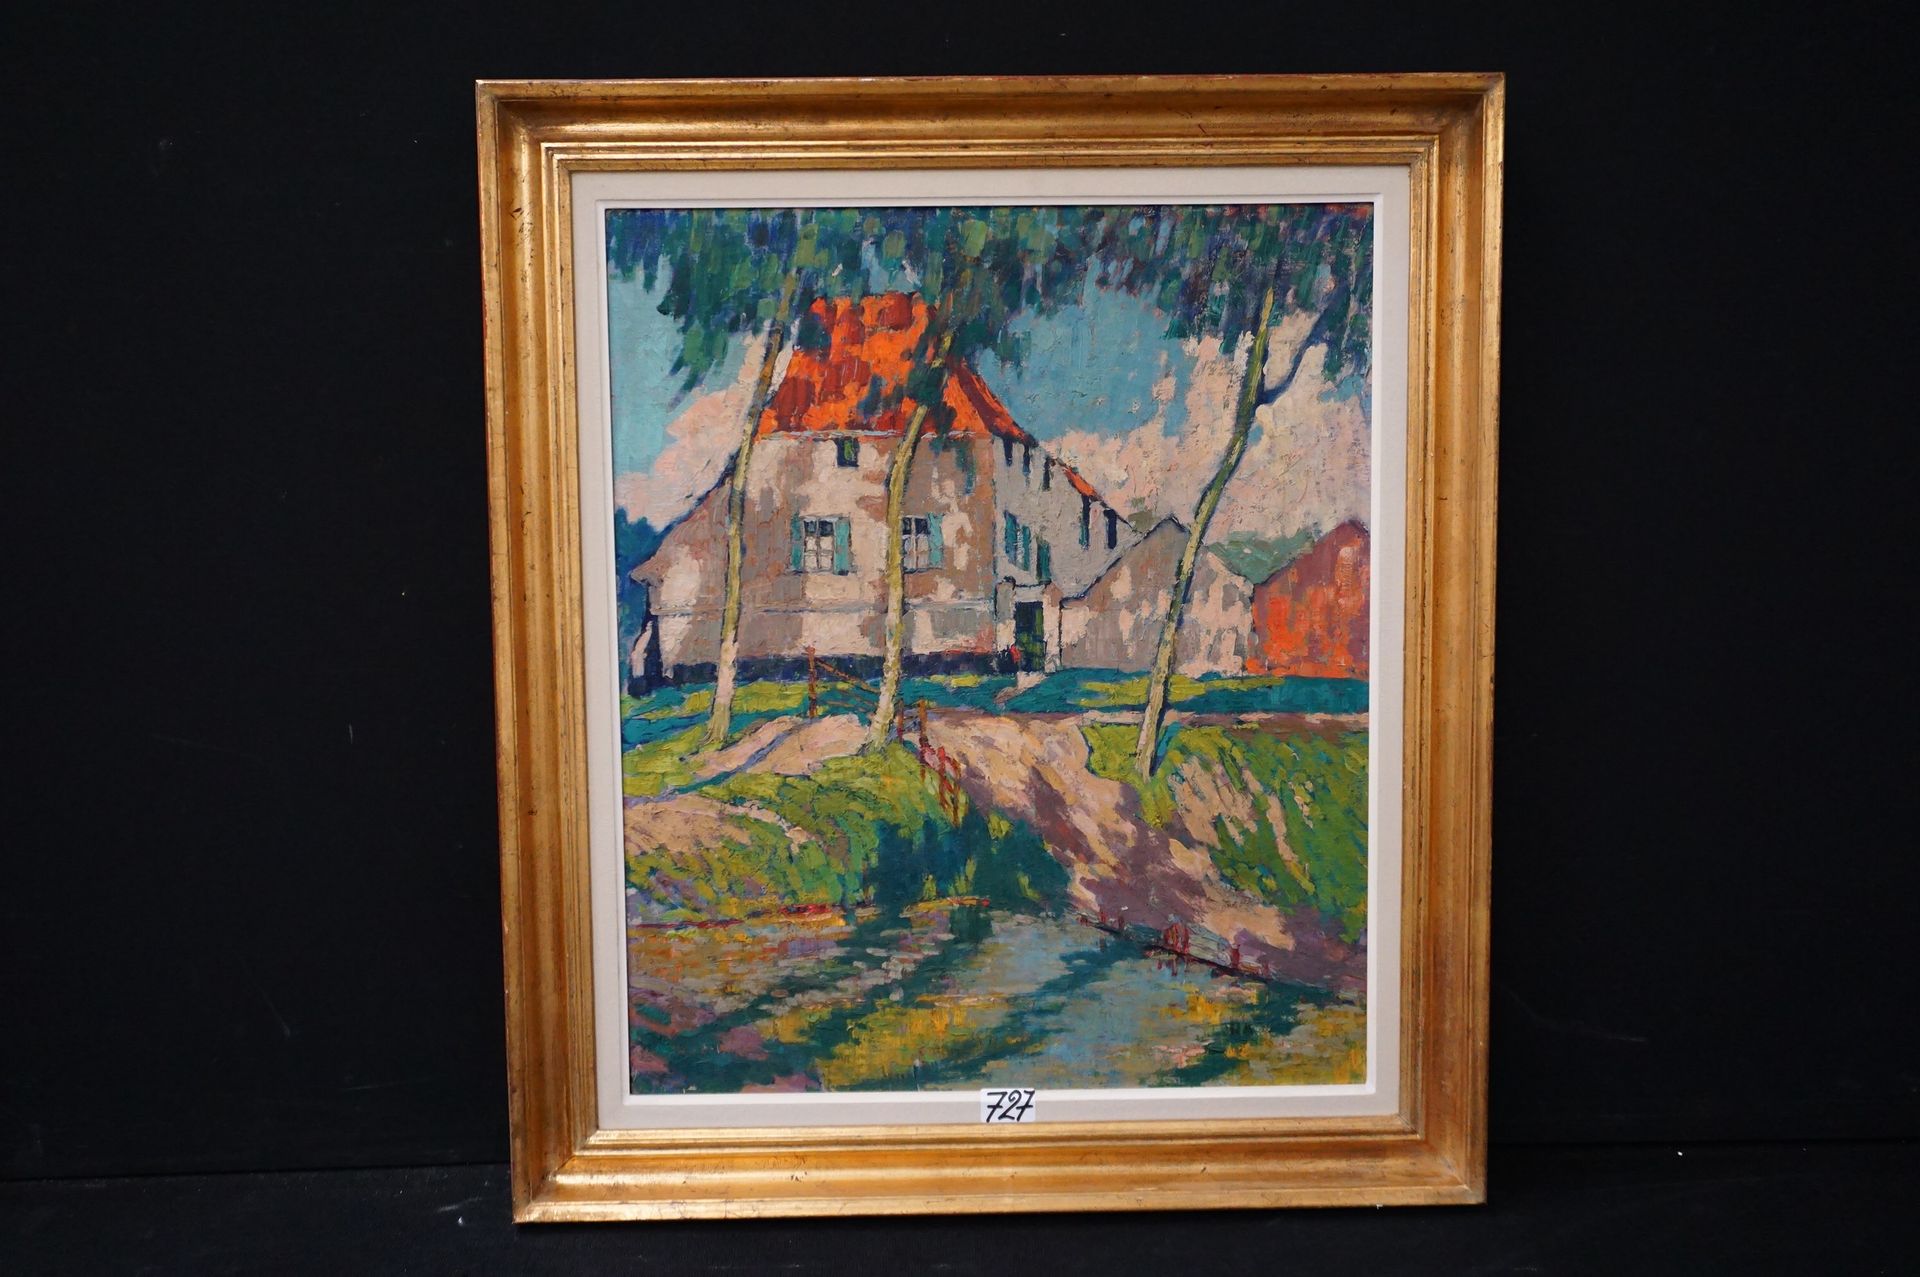 HERVE GEERLANDT (1880 - 1939) "Ferme du château de Beersel" - 布面油画 - 已签名 - 背面有签名&hellip;